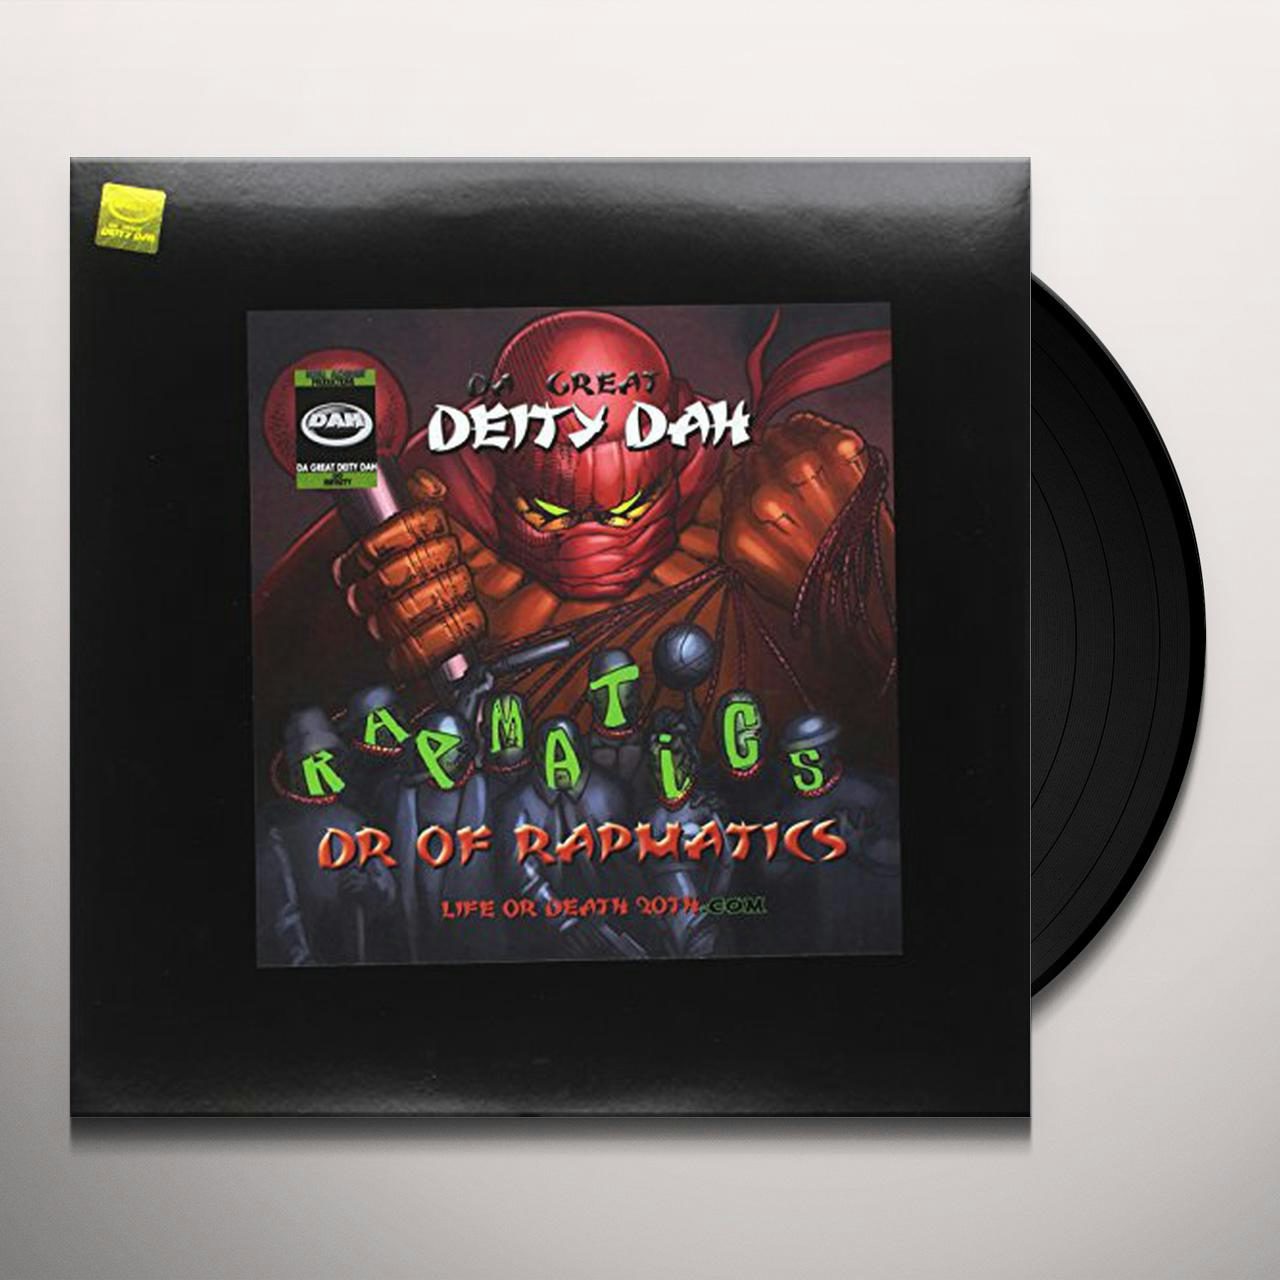 Da Great Deity Dah Dr of Rapmatics Vinyl Record